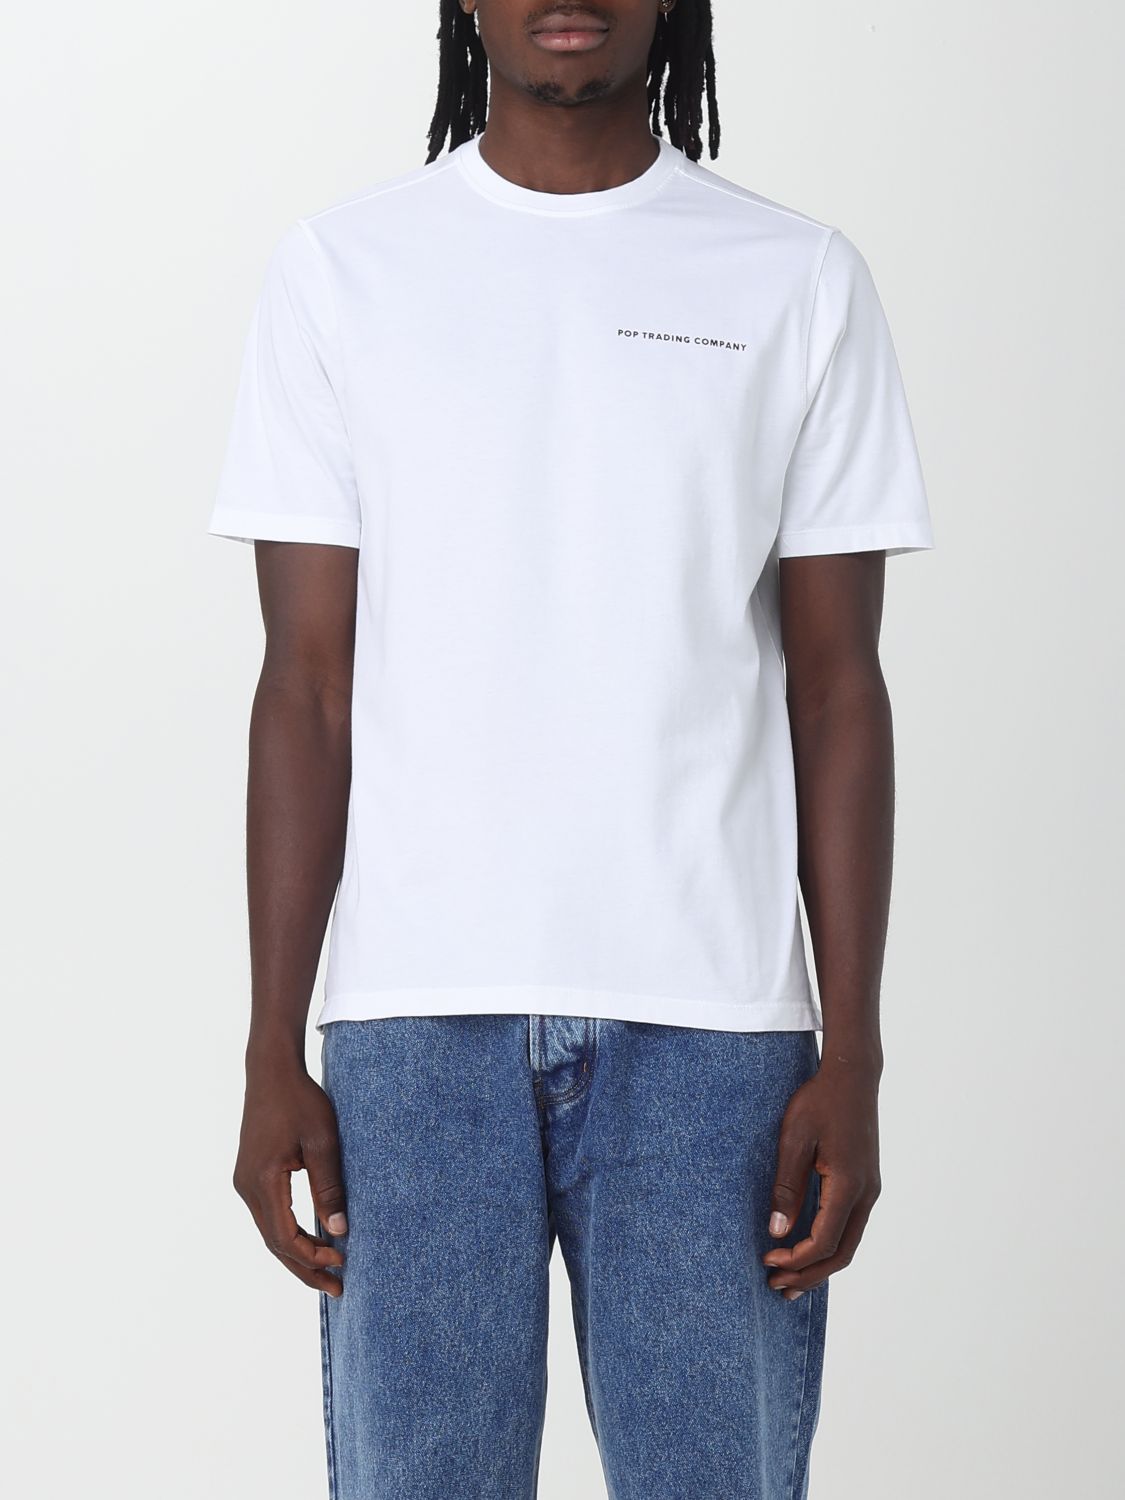 t-shirt pop trading company men colour white